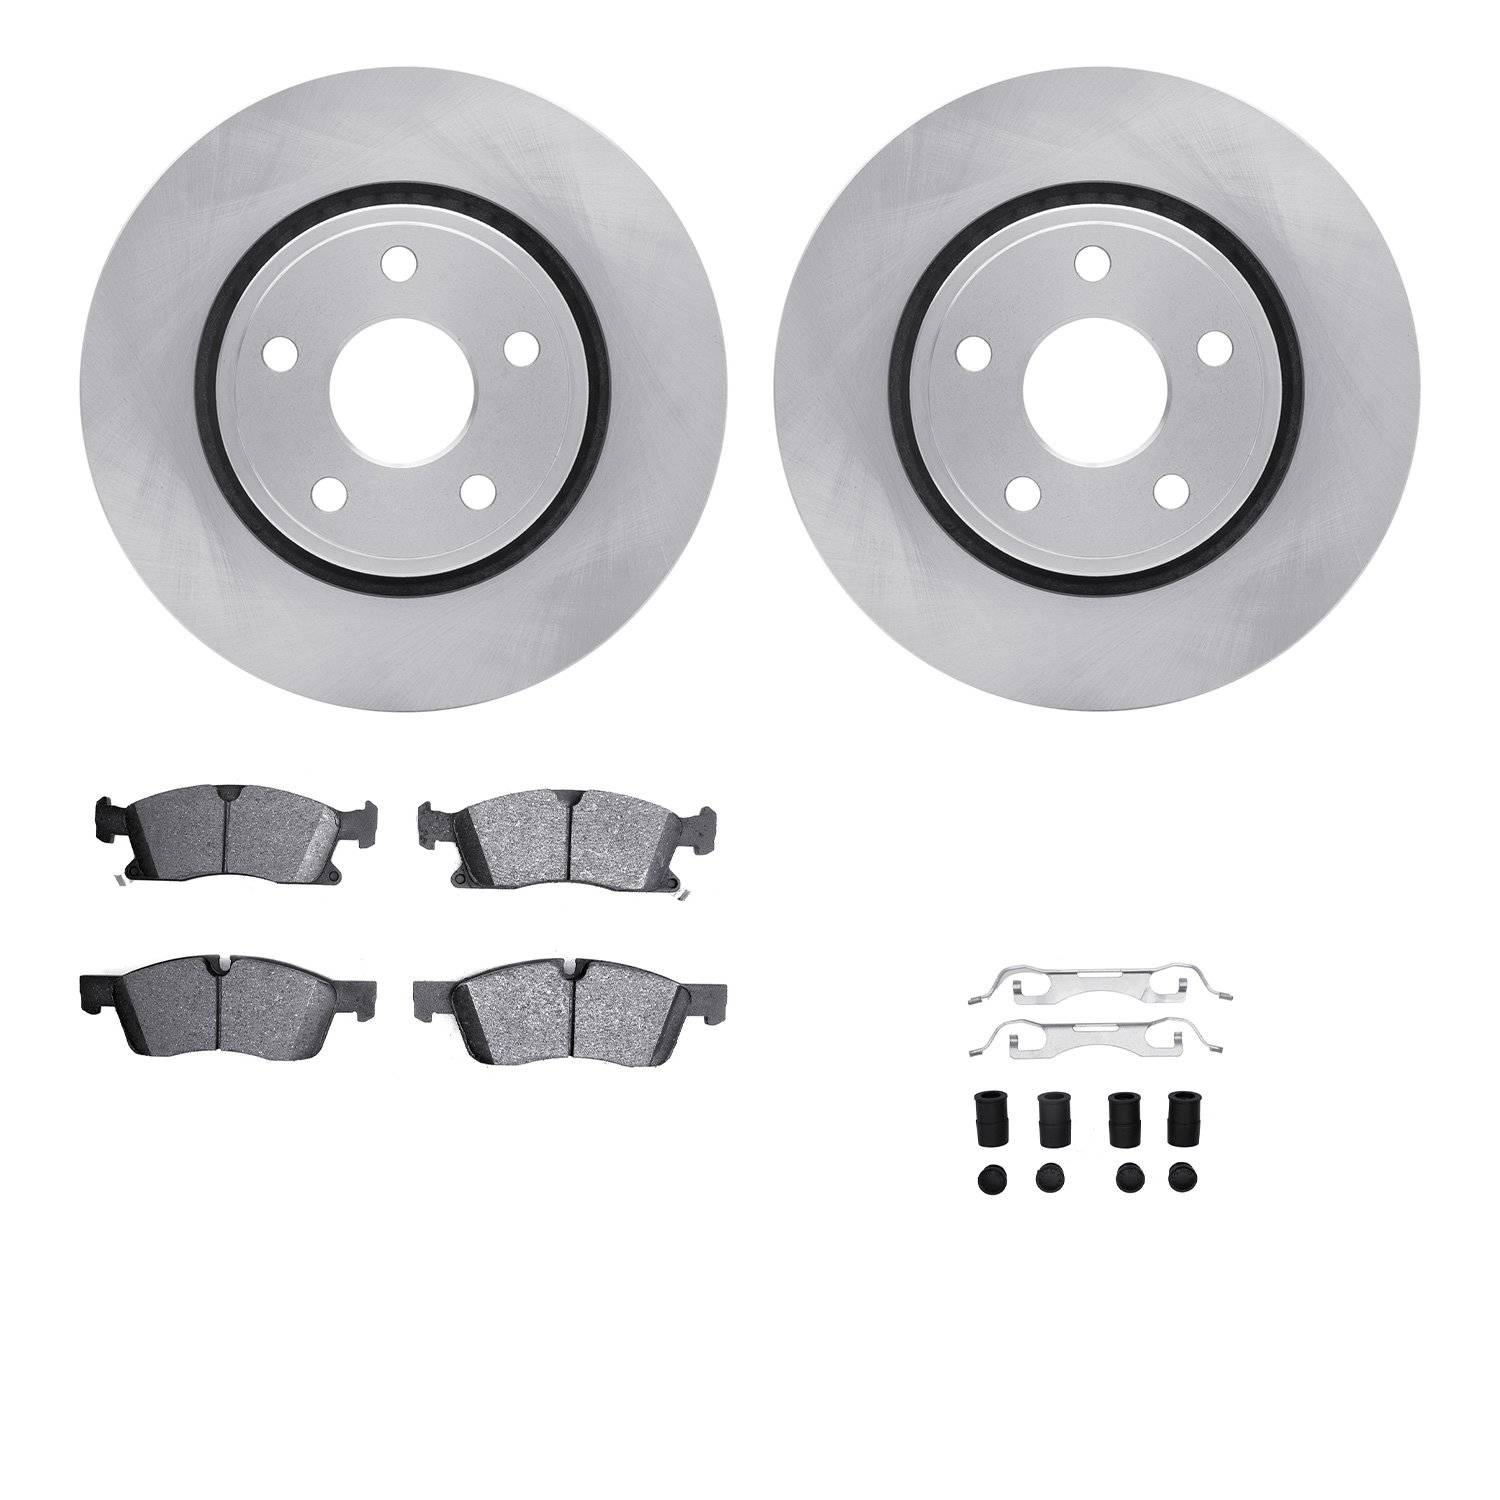 6212-42004 Brake Rotors w/Heavy-Duty Brake Pads Kit & Hardware, Fits Select Mopar, Position: Front